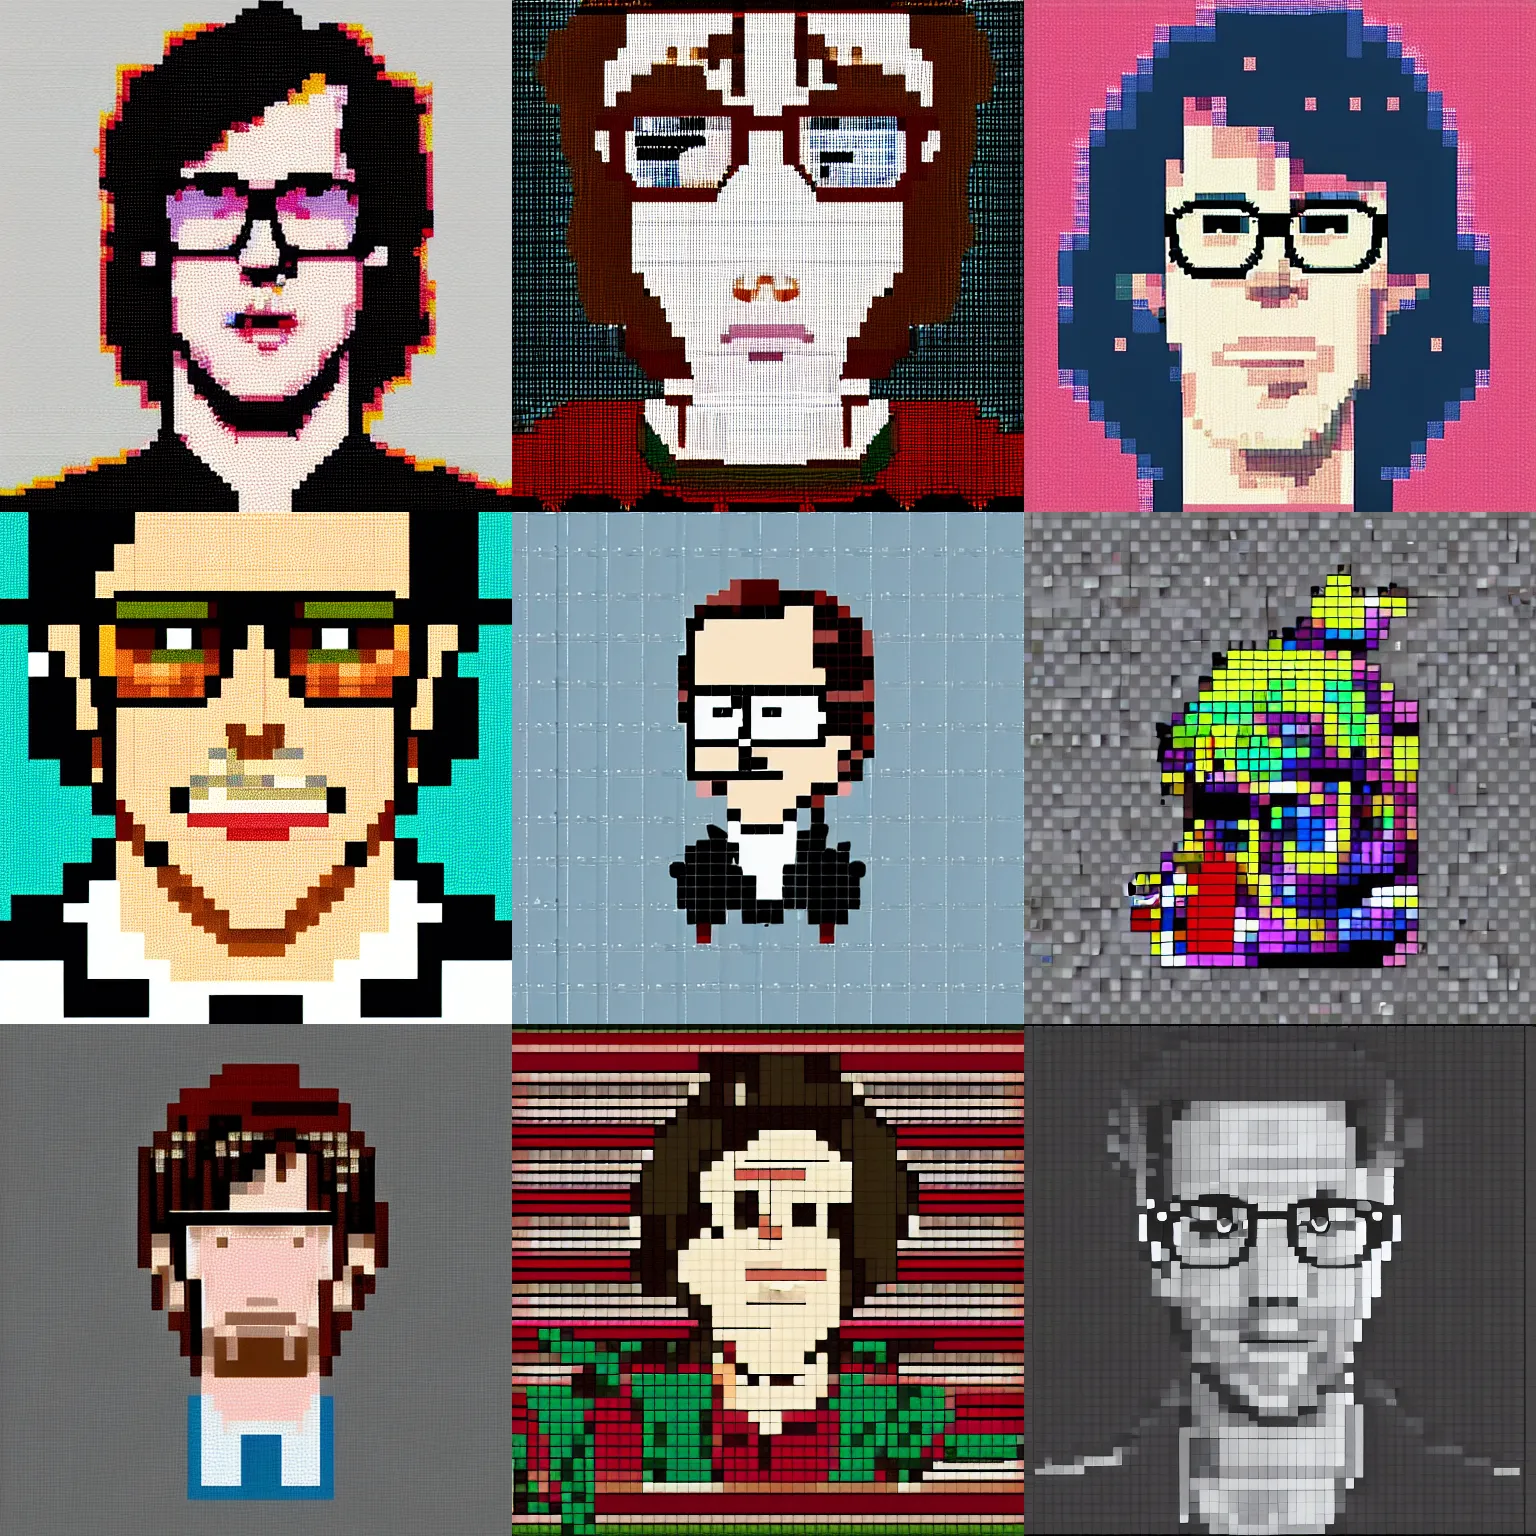 Prompt: detailed pixel art of Ben Folds